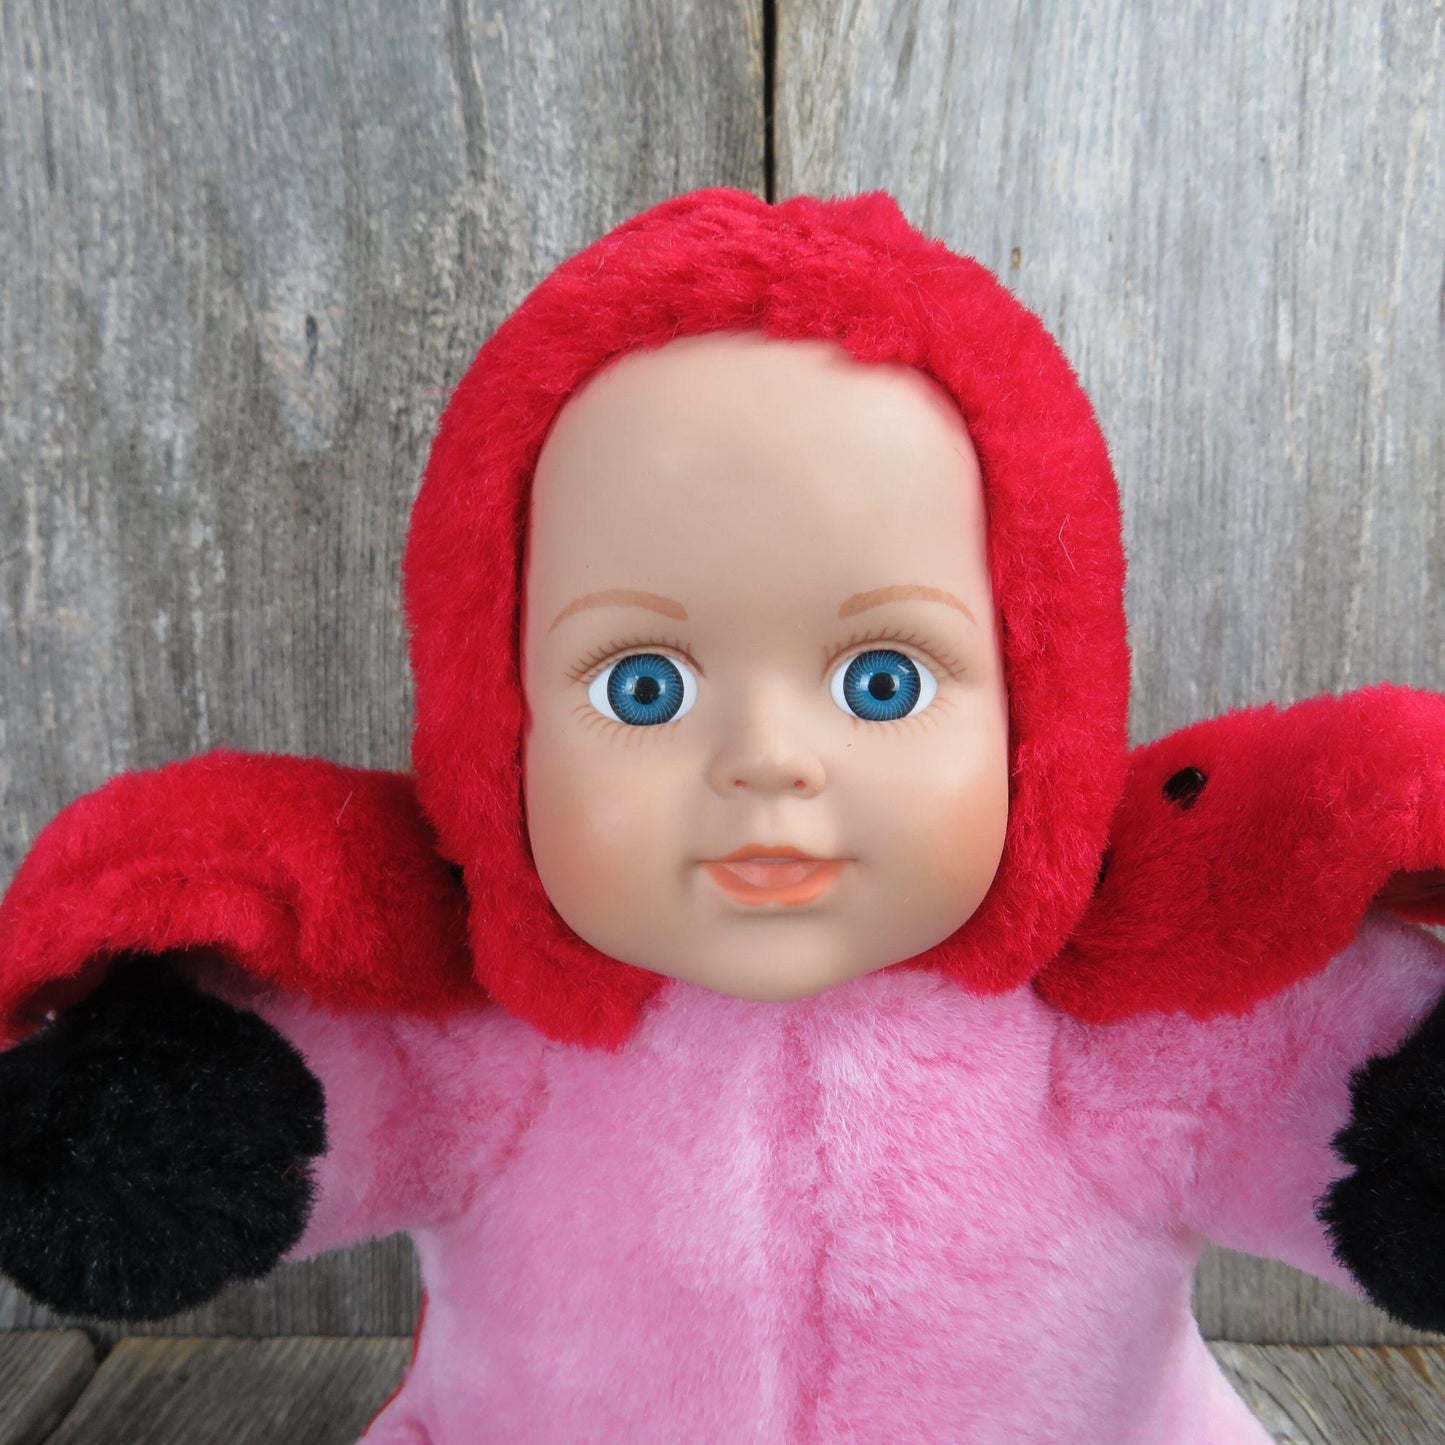 Vintage Ladybug Doll Plush Kellytoy Rubber Face Stuffed Animal Body Red Pink 2000 Kelly toy